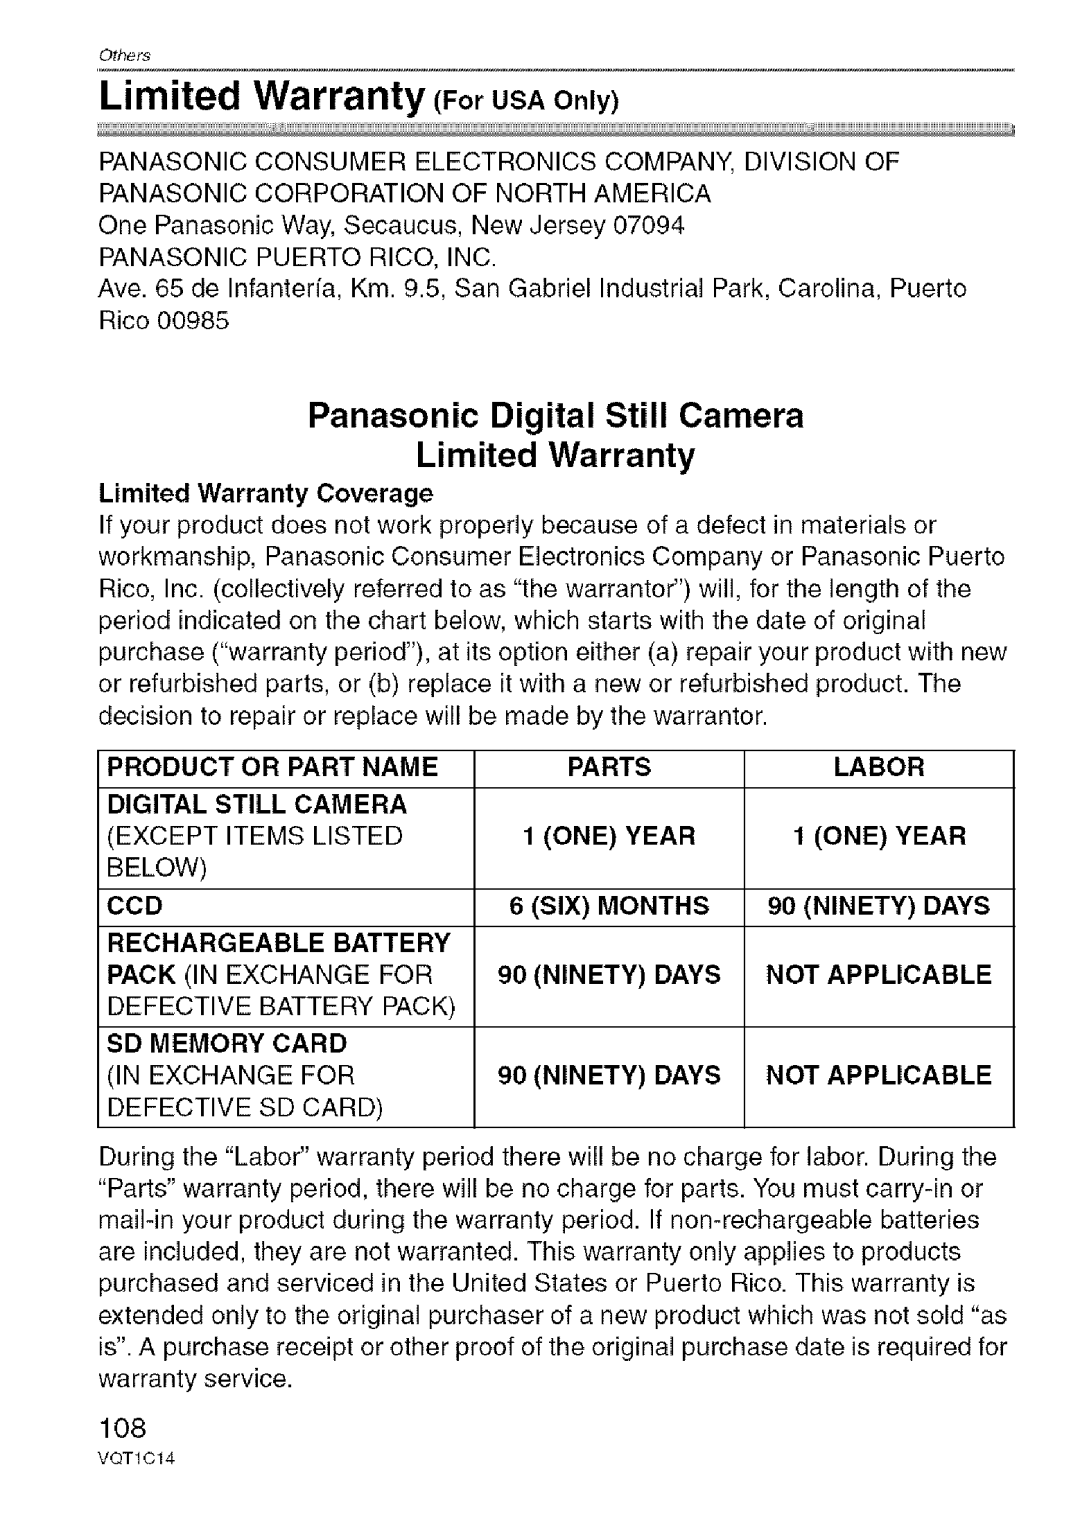 Panasonic DMC-FX12, DMC-FX10 Limited Warranty For USA Only, Panasonic Digital Still Camera Limited Warranty 